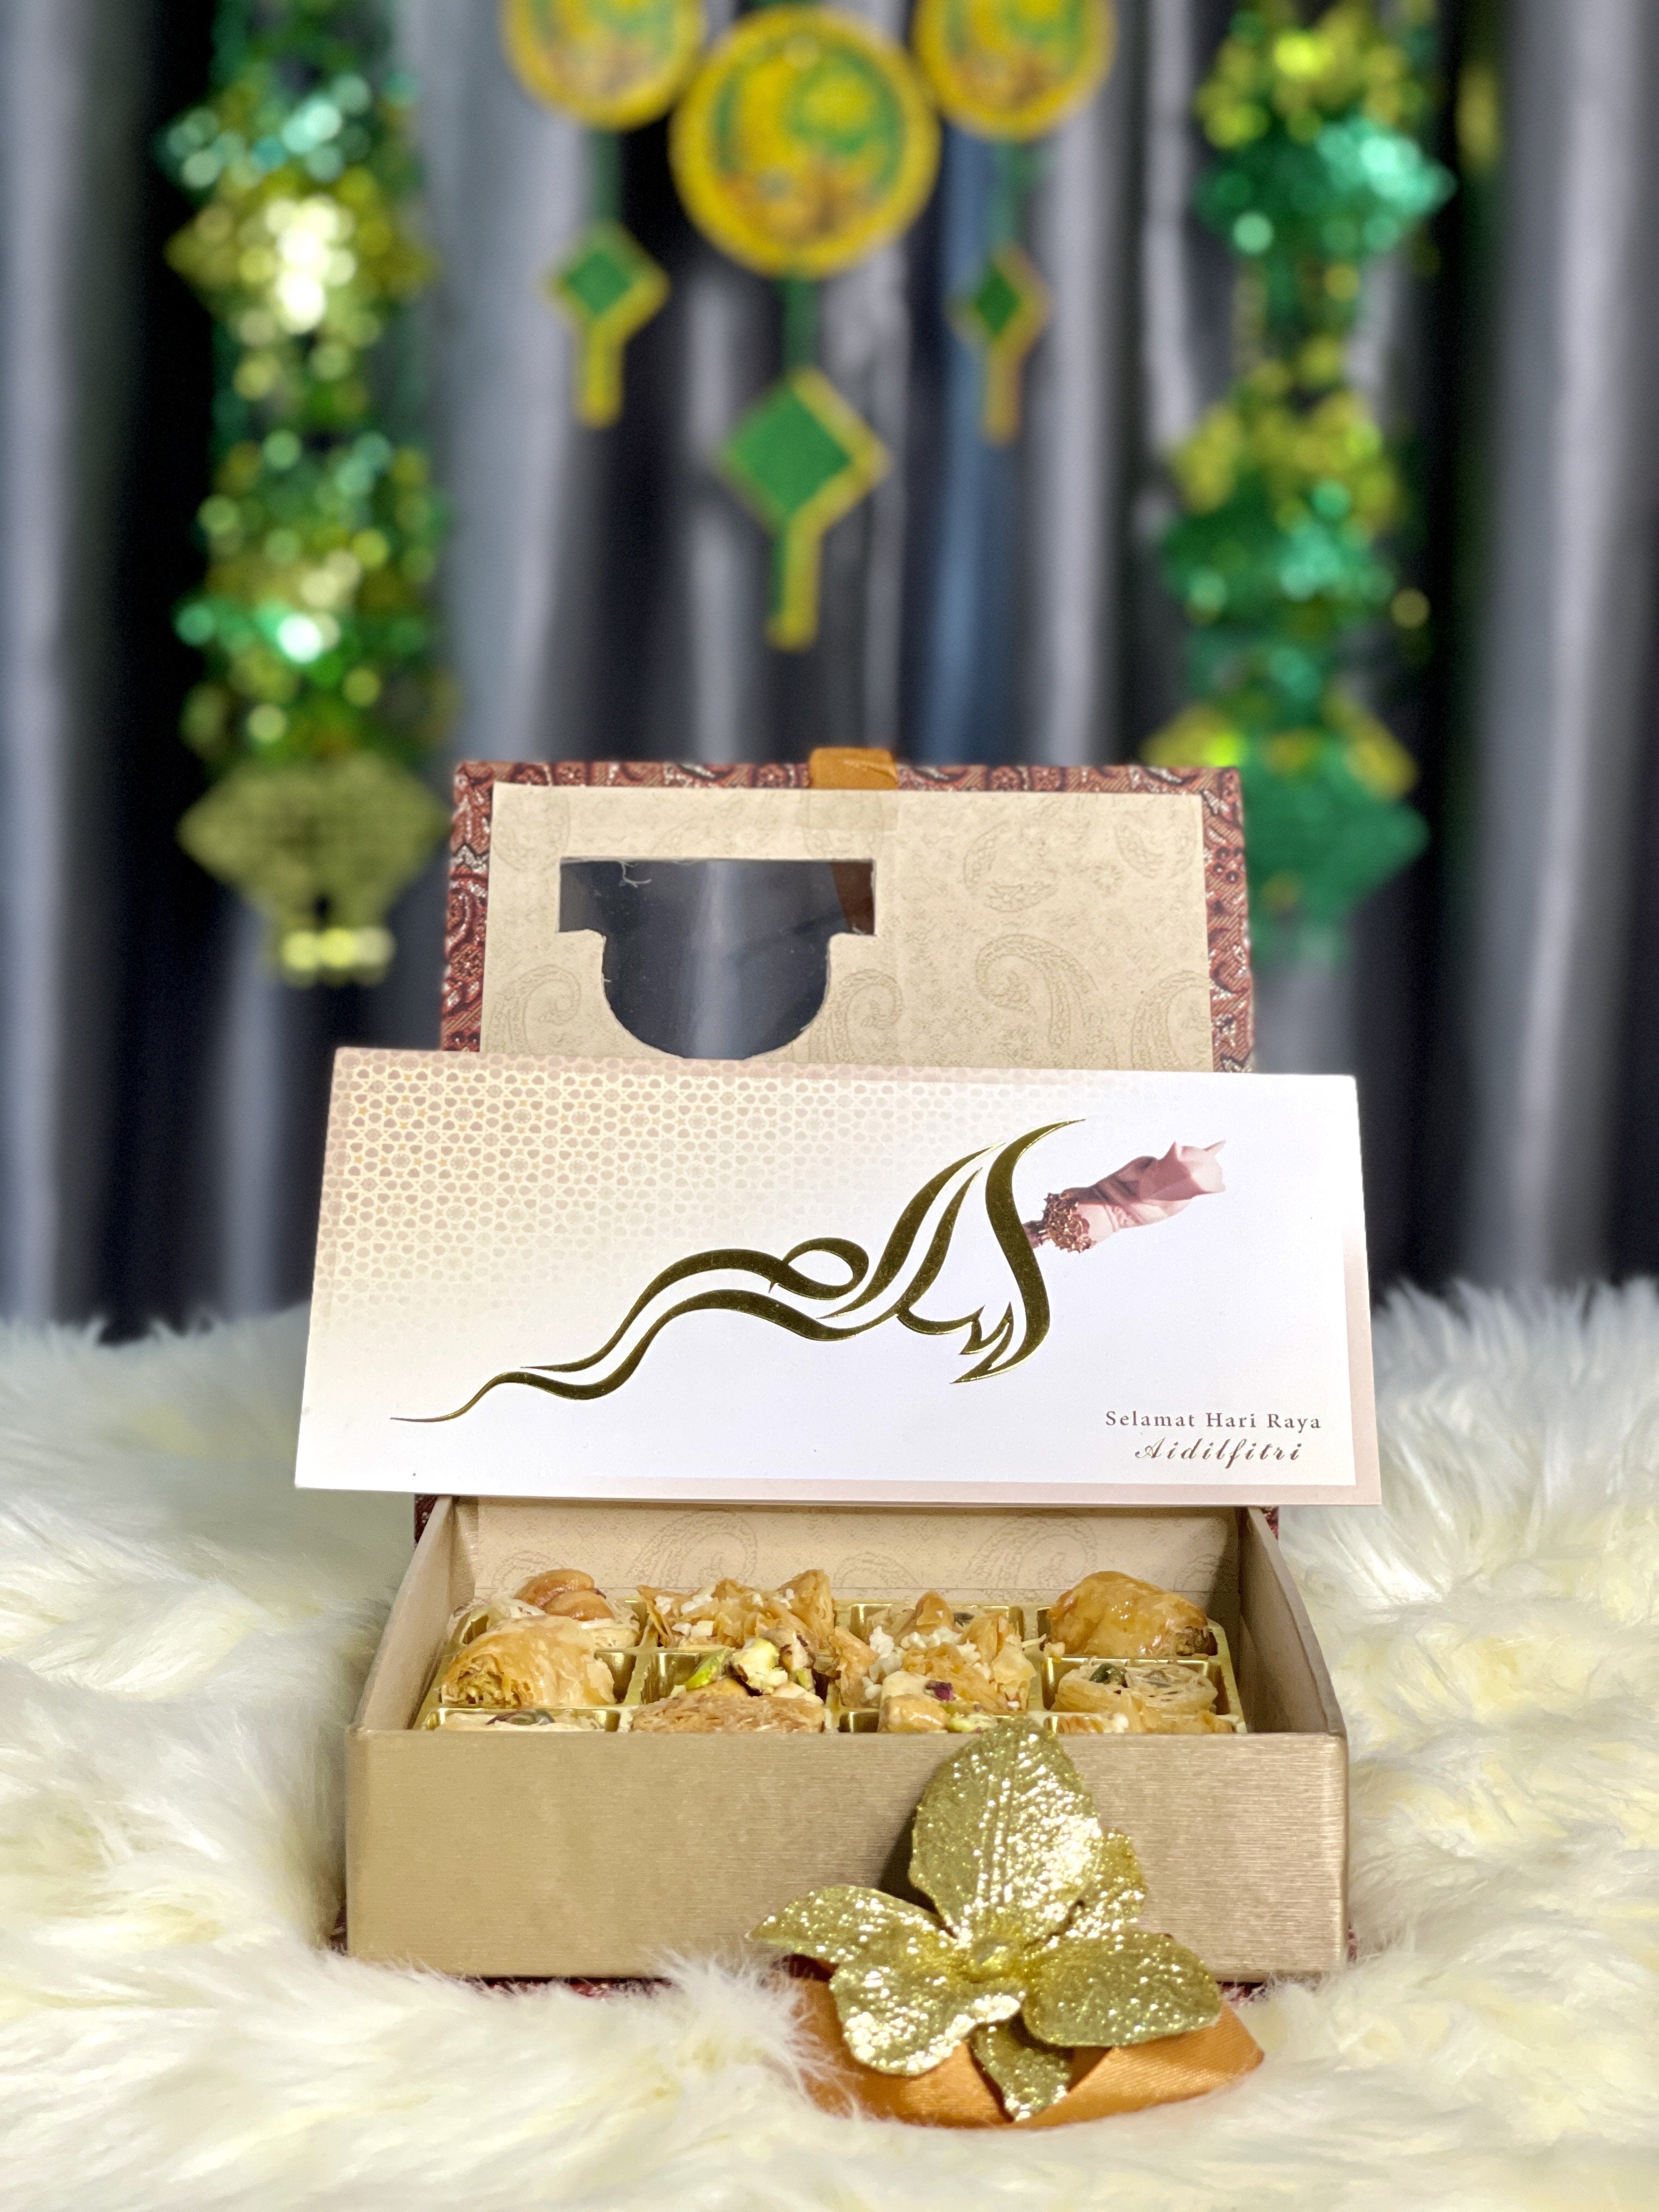 Baklava Gift Box